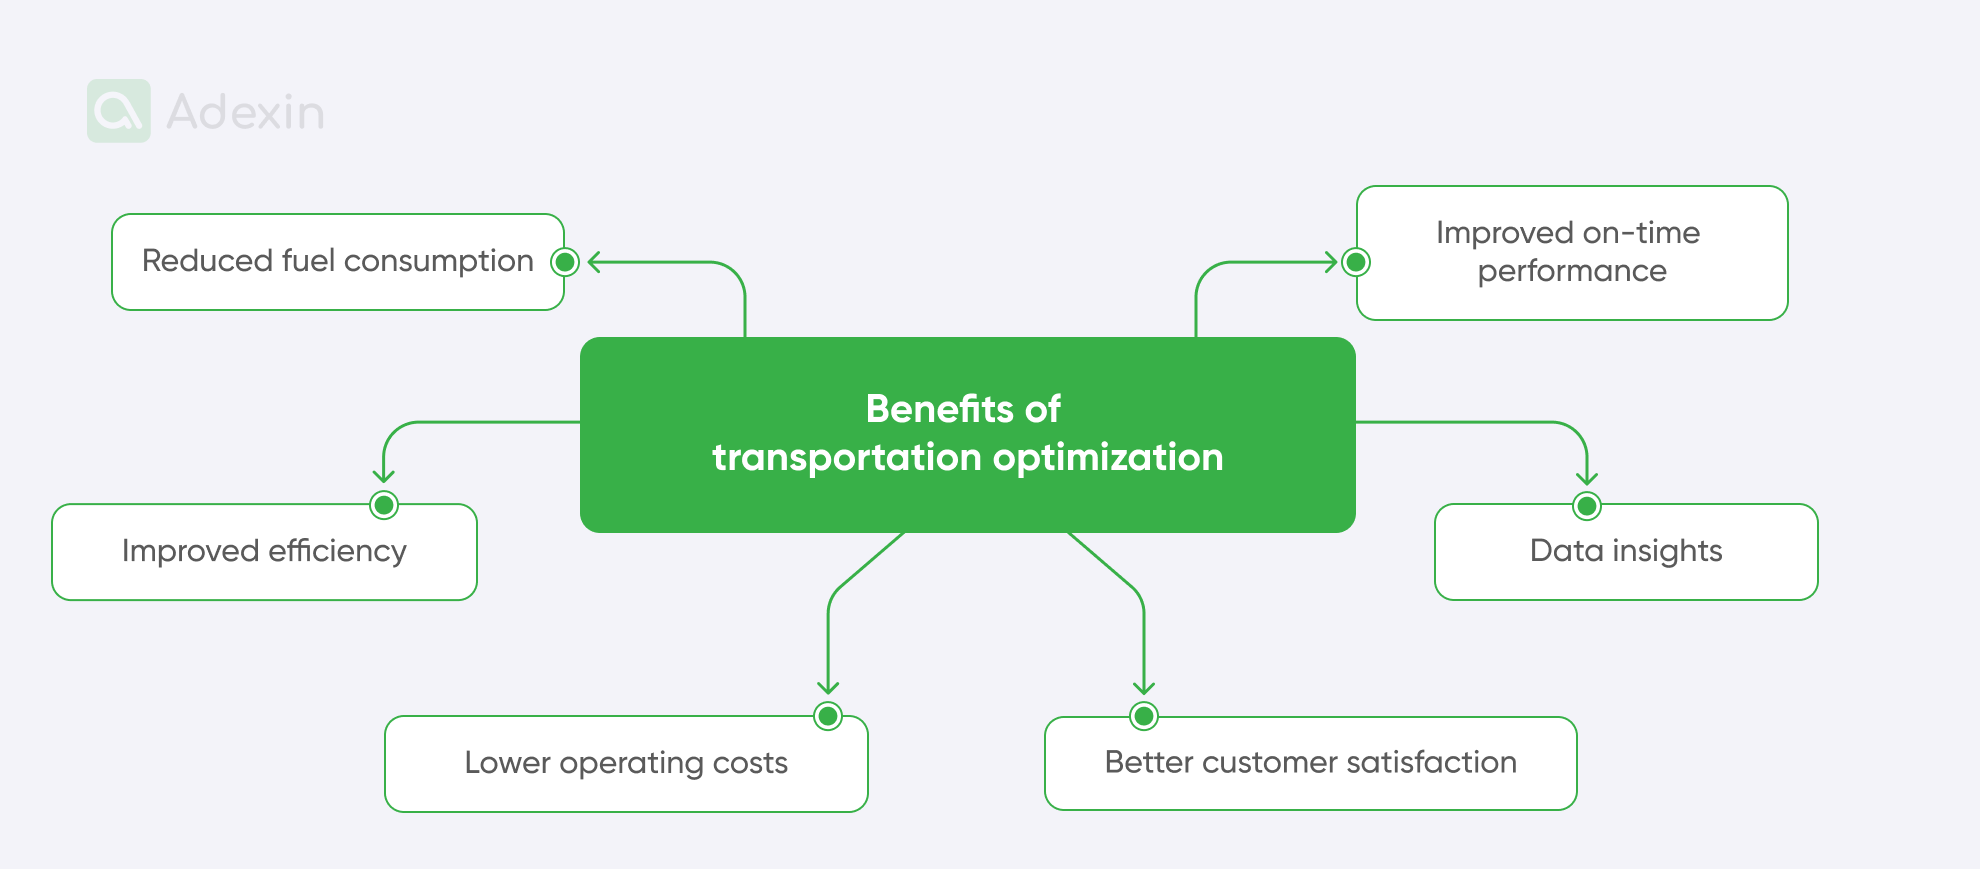 Benefits of transportation optimization